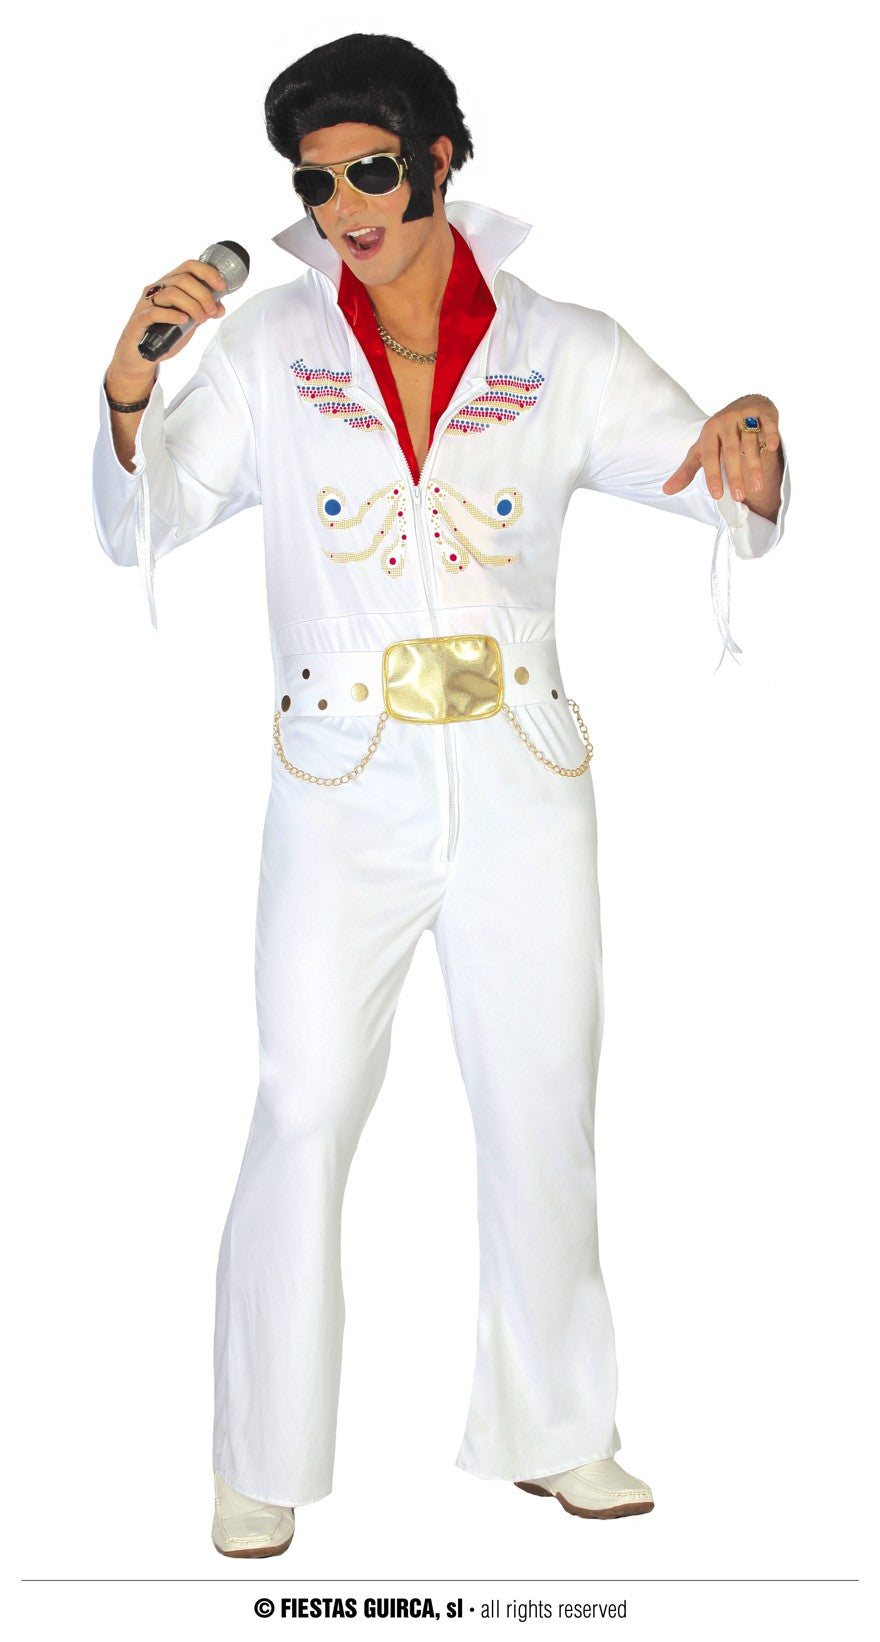 King of Rock Men's Elvis Inspired Fancy Dress Costume